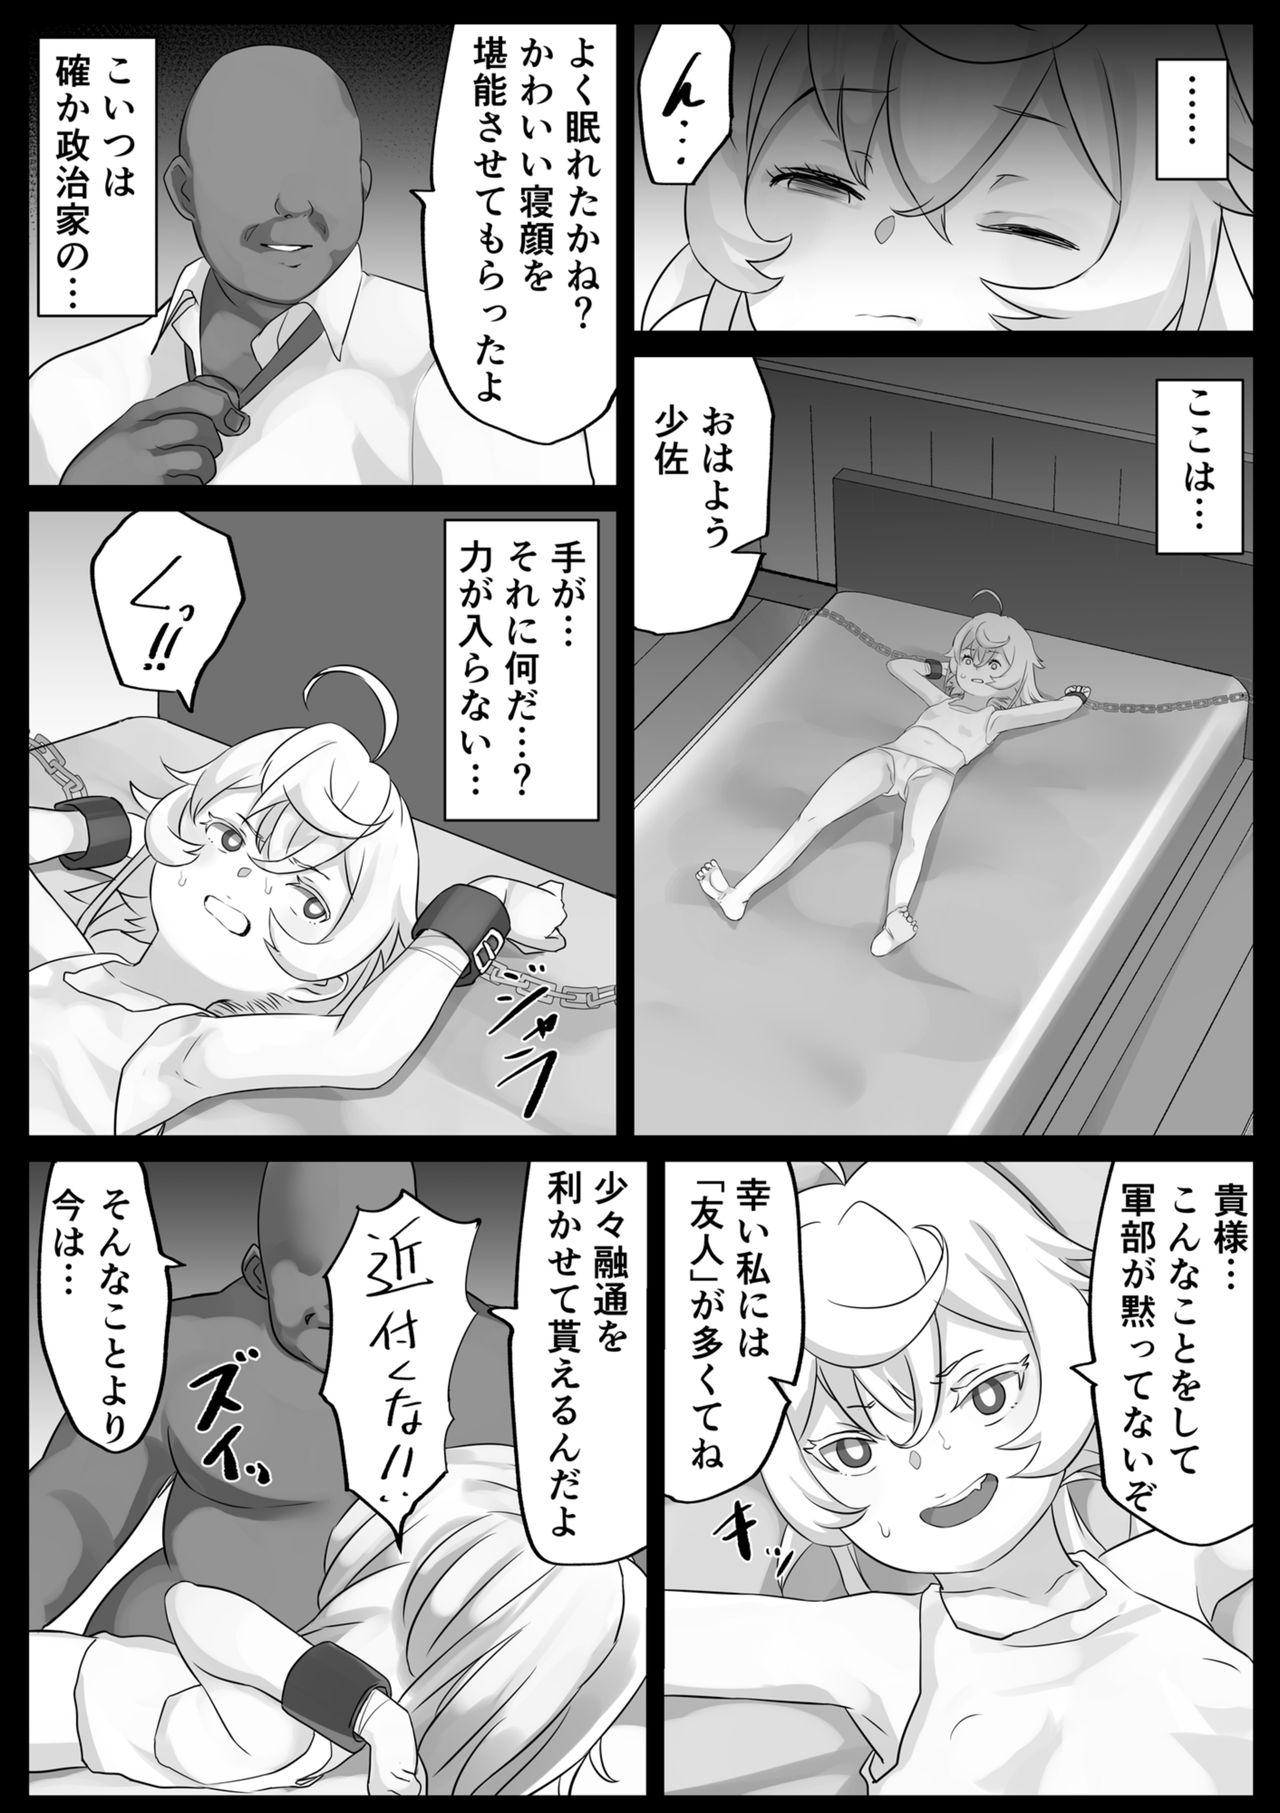 Amigo Ojisan vs Ojisan - Youjo senki Shower - Page 2